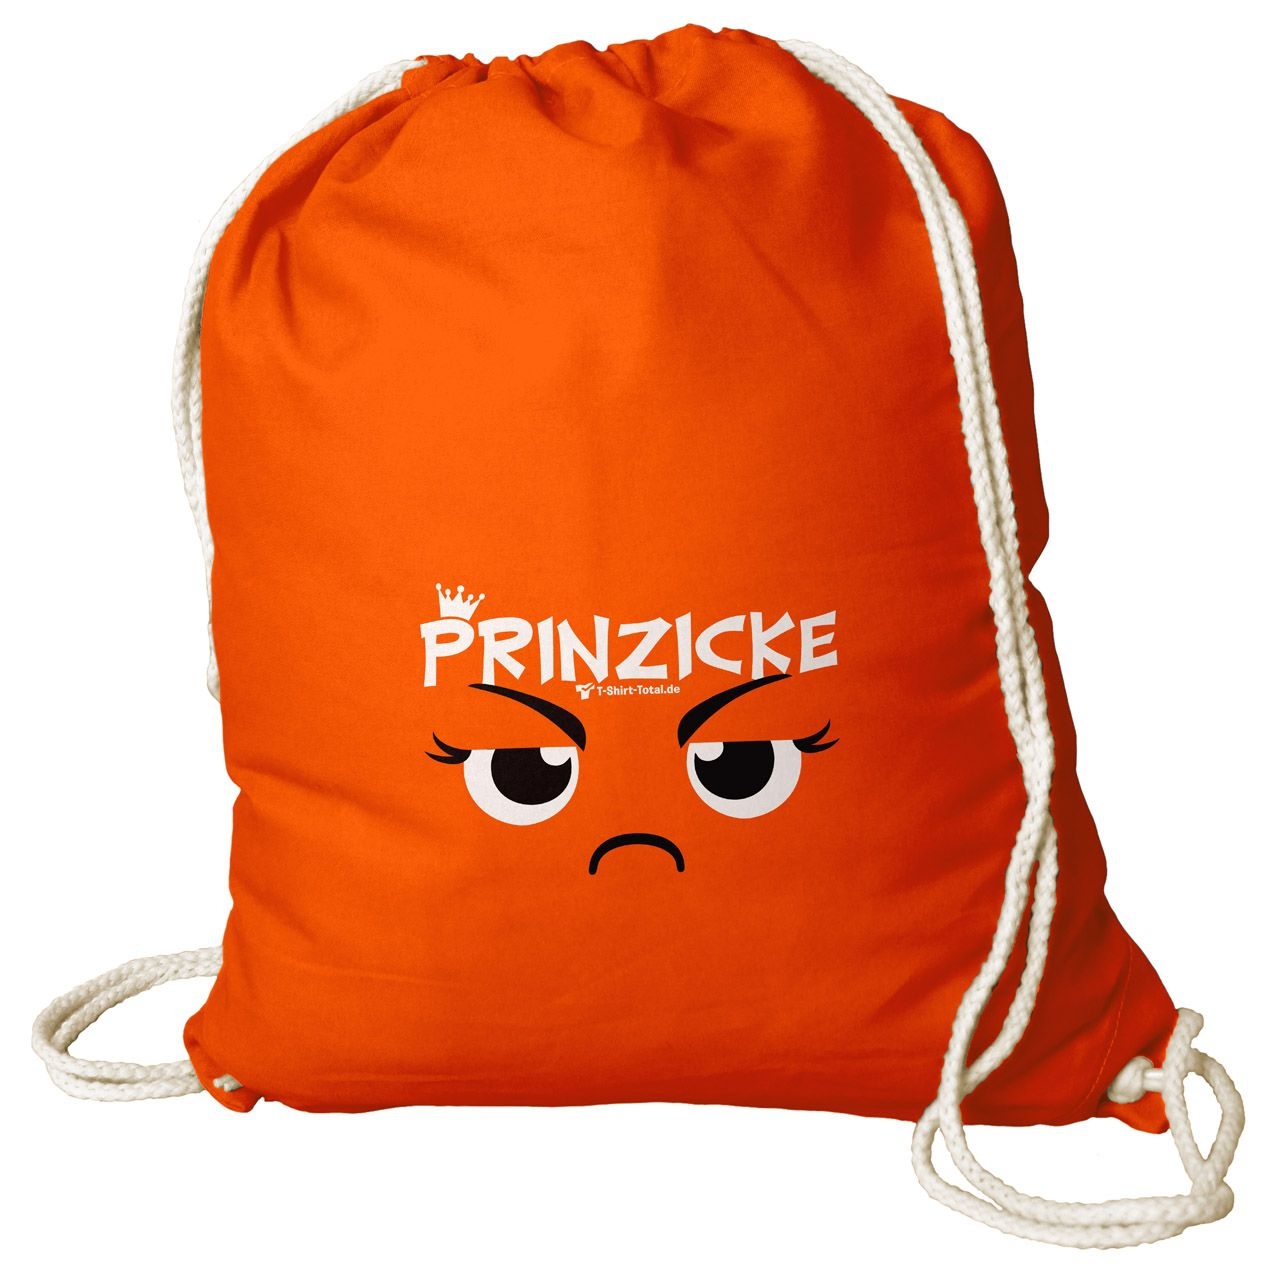 Prinzicke Rucksack Beutel orange